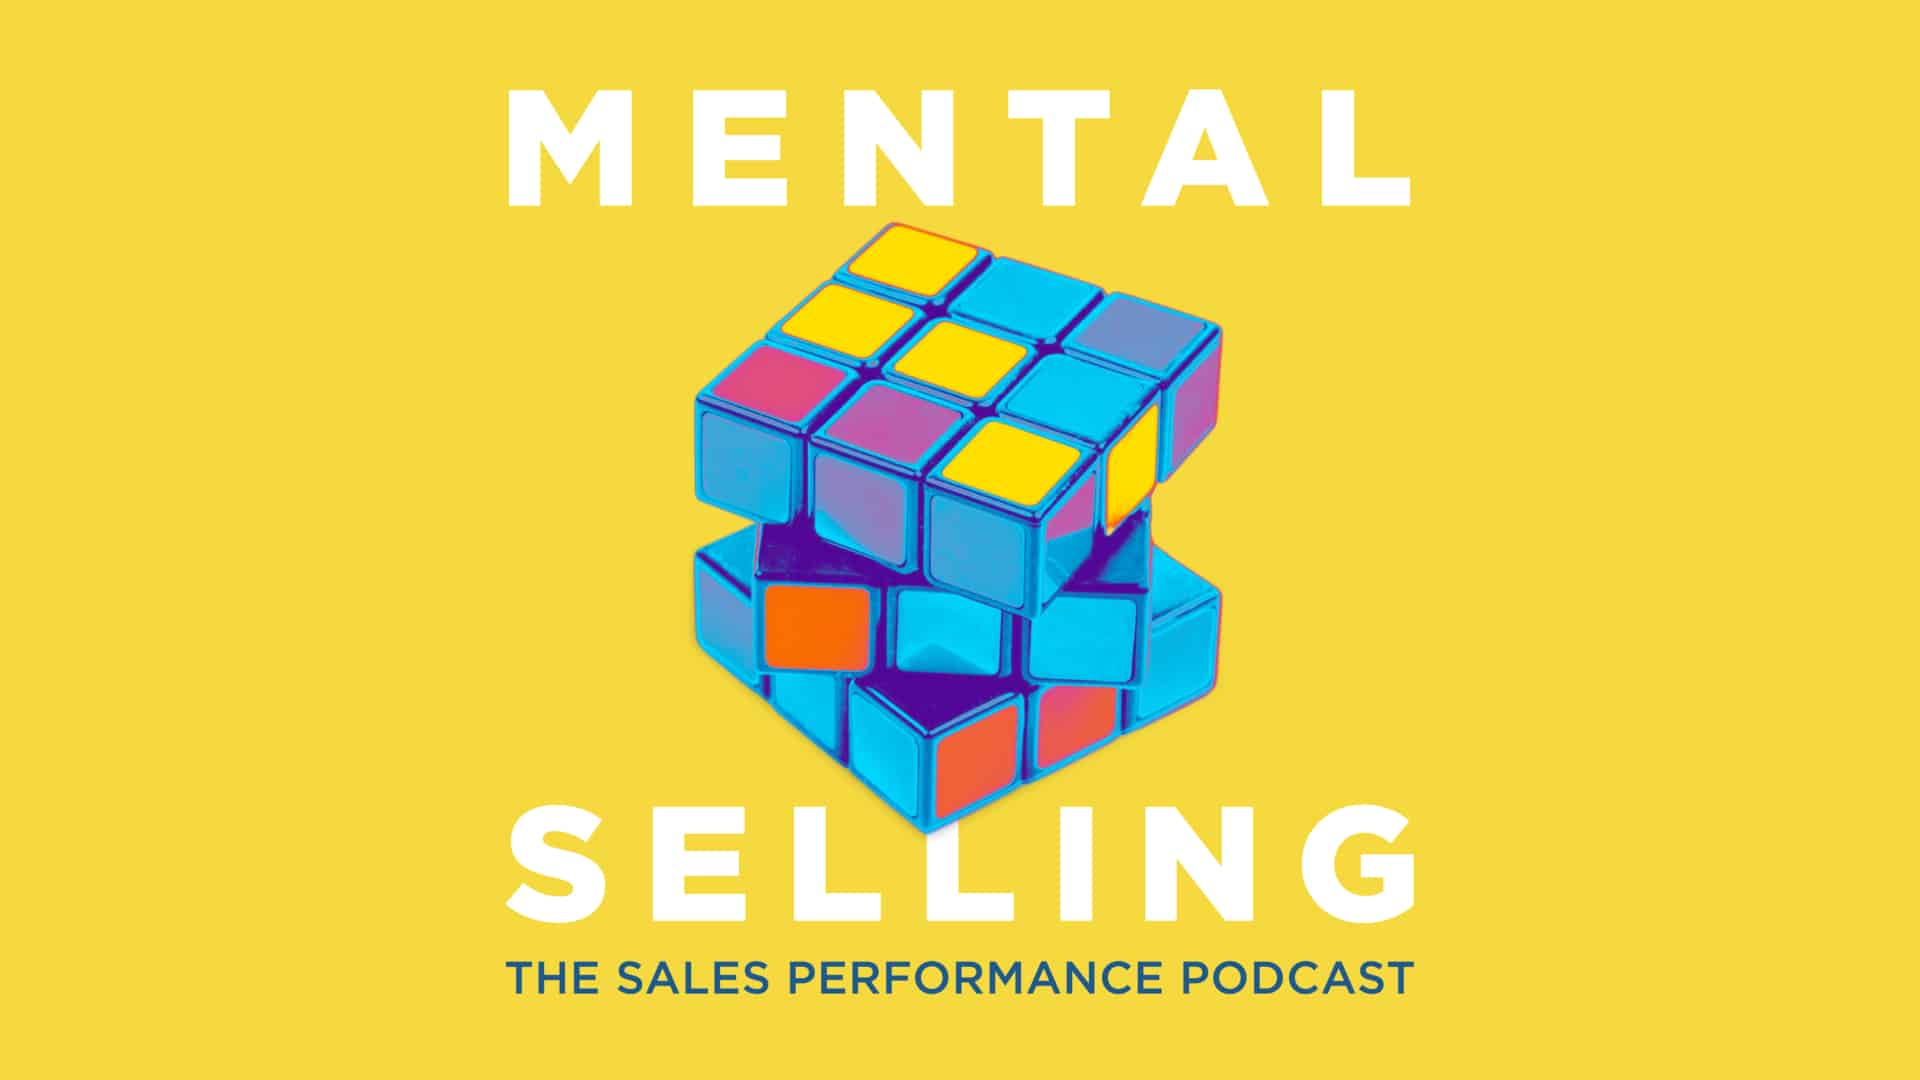 Mental Selling podcast thumbnail.